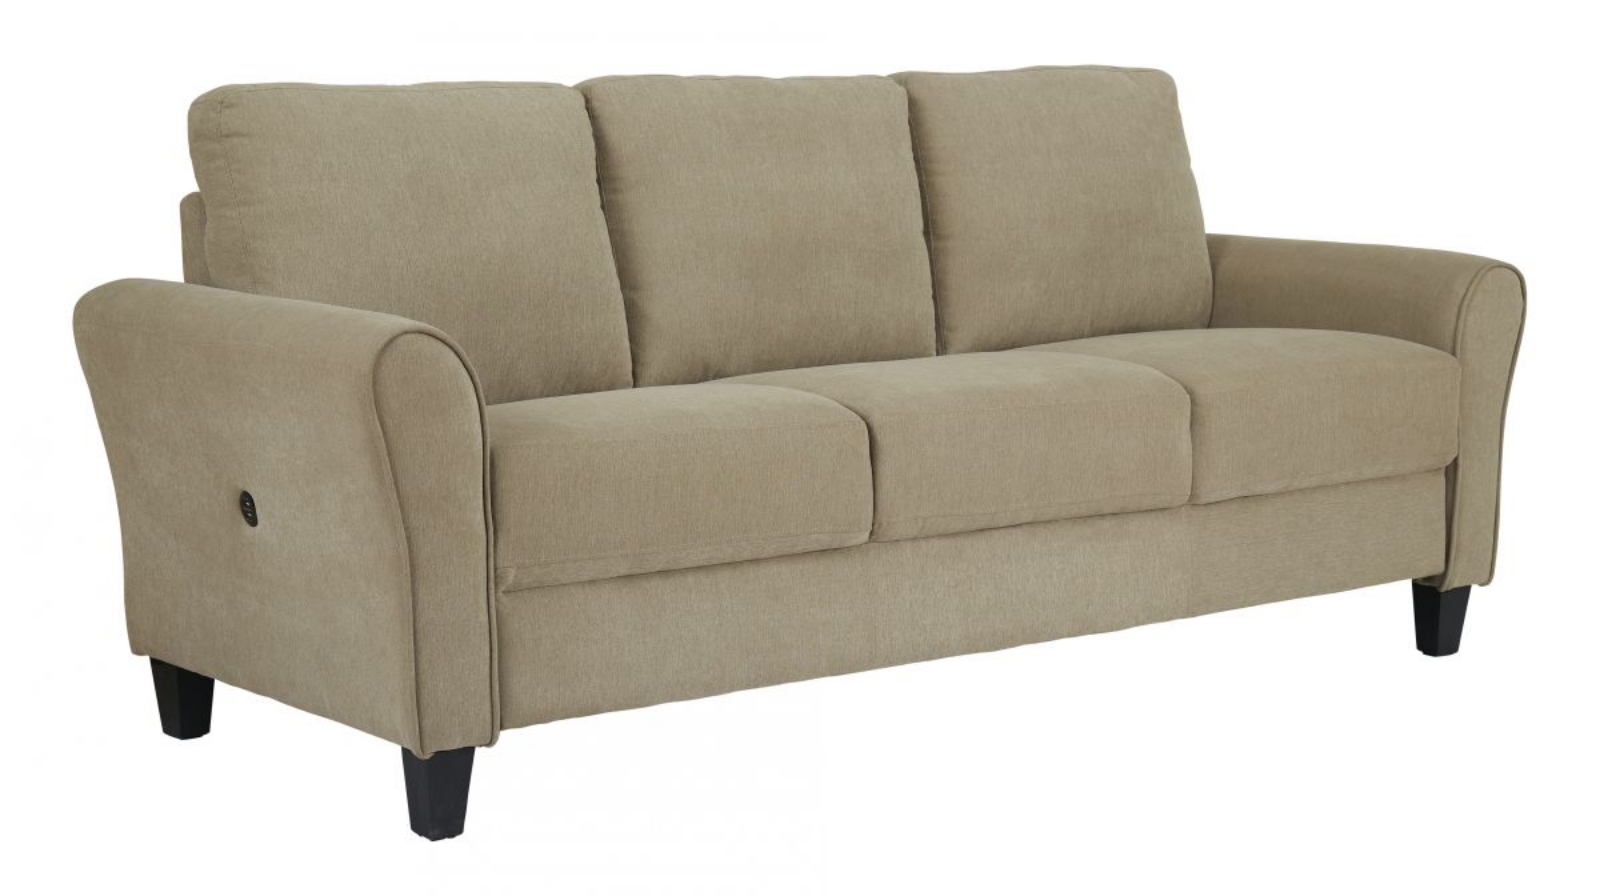 Picture of Carten Sofa